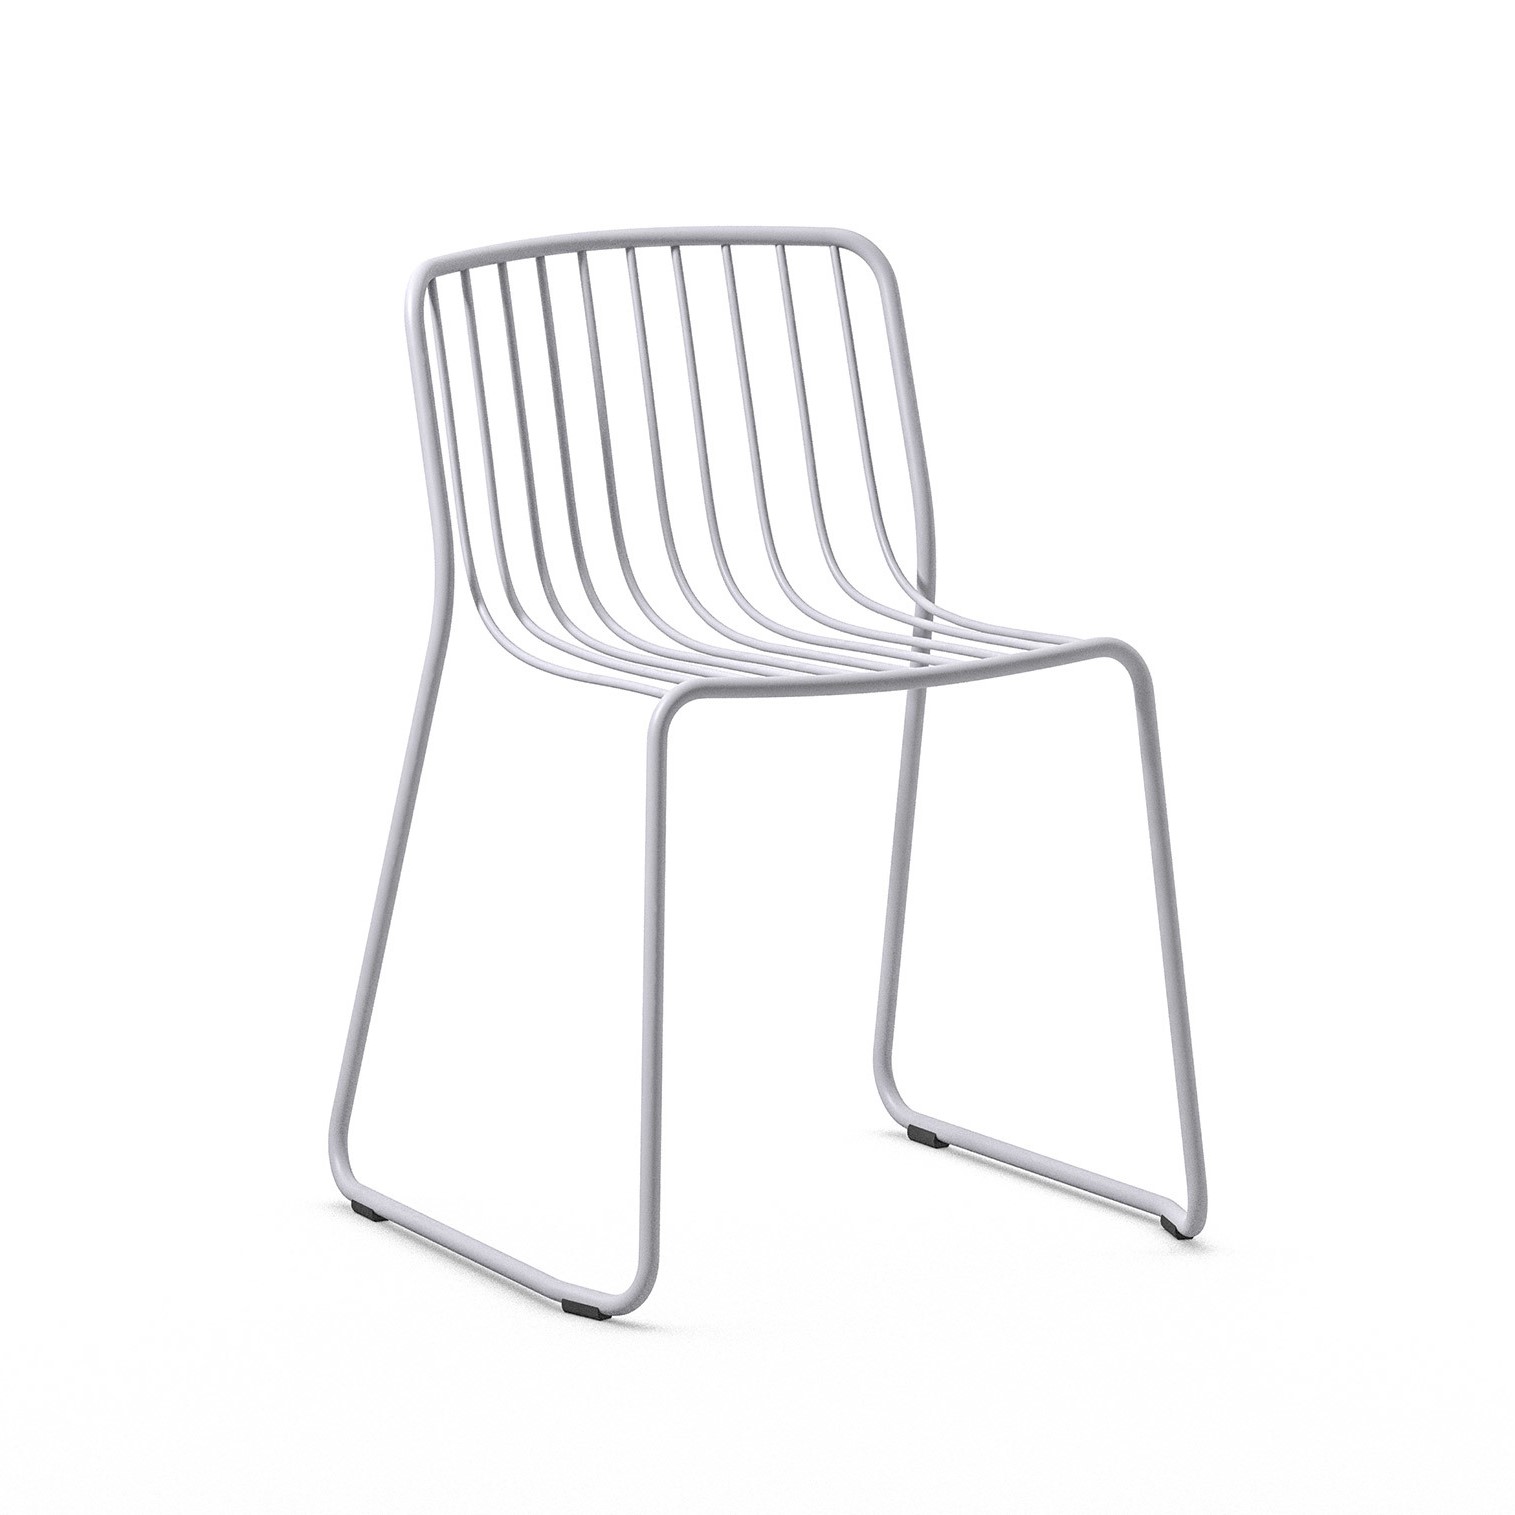 RANDA NUDE chair - set of 2 pieces